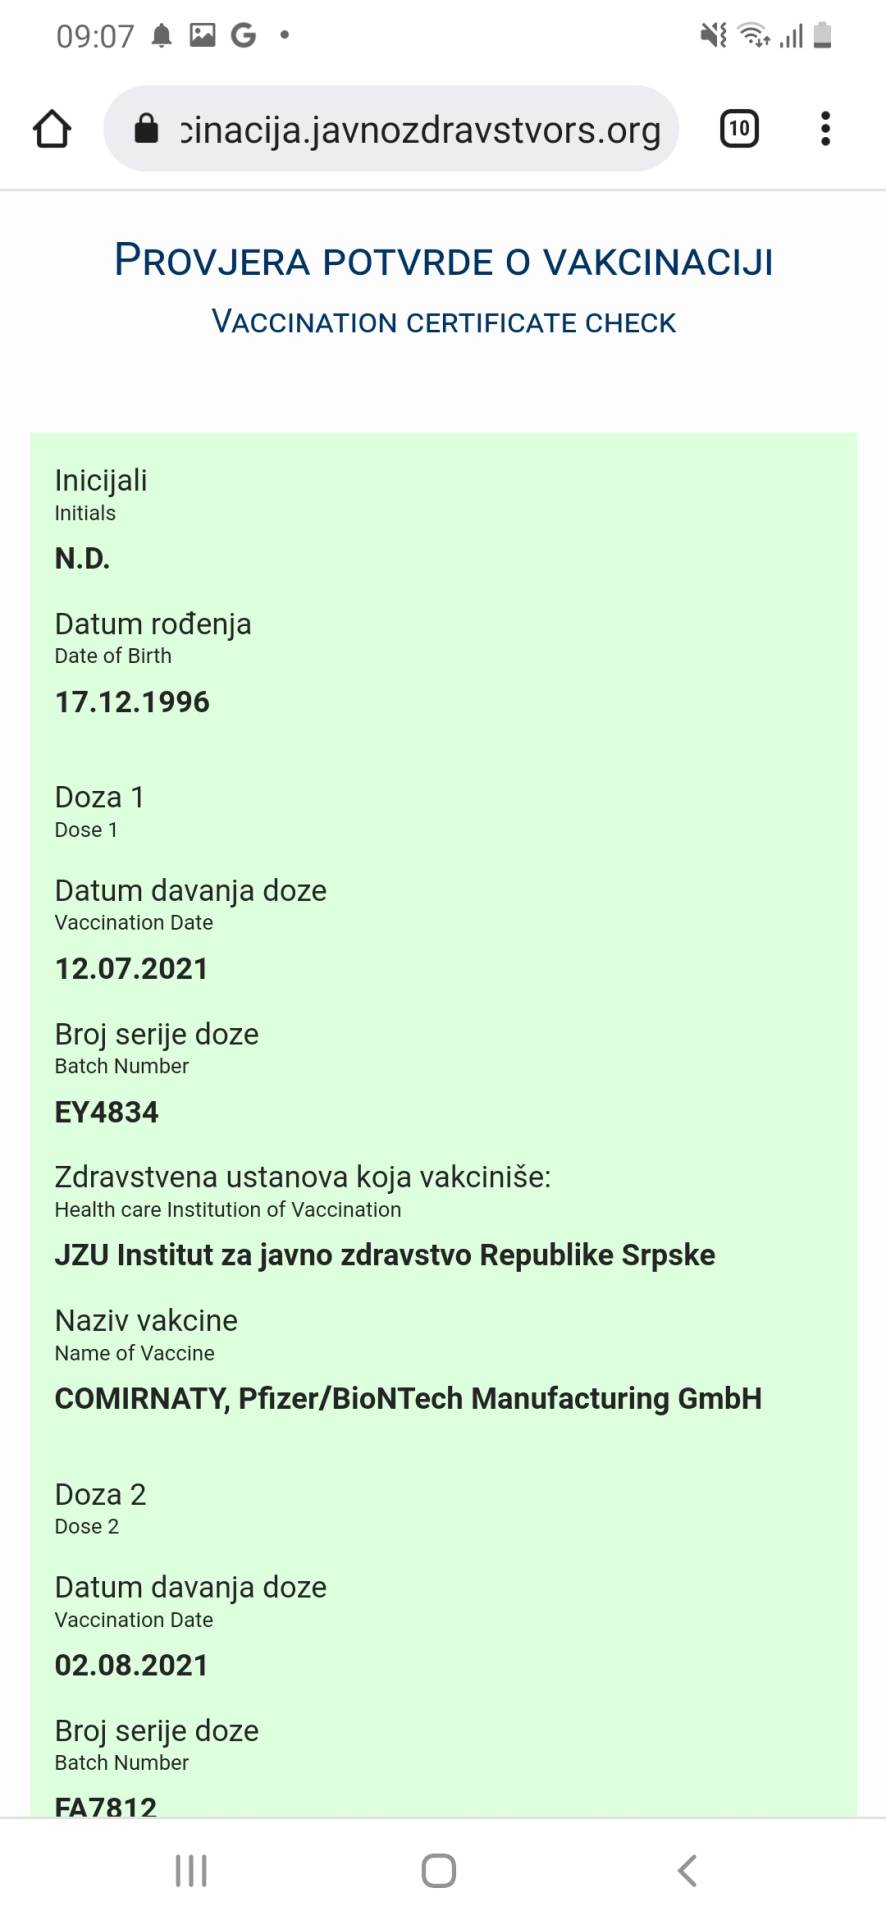 Skenirana potvrda o vakcinaciji Instituta za javno zdravstvo Republike Srpske 